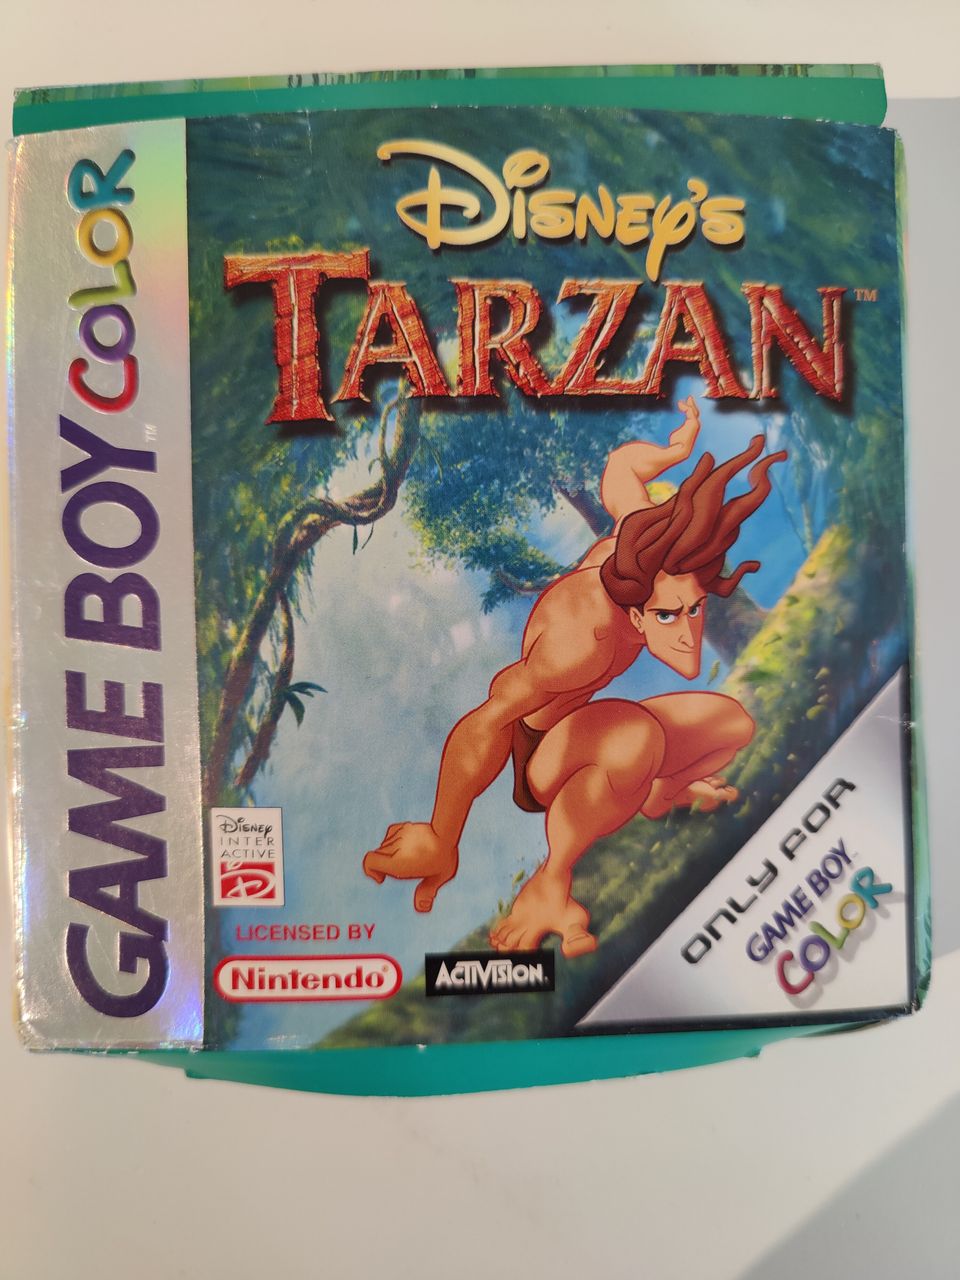 Game Boy Color Disney's Tarzan